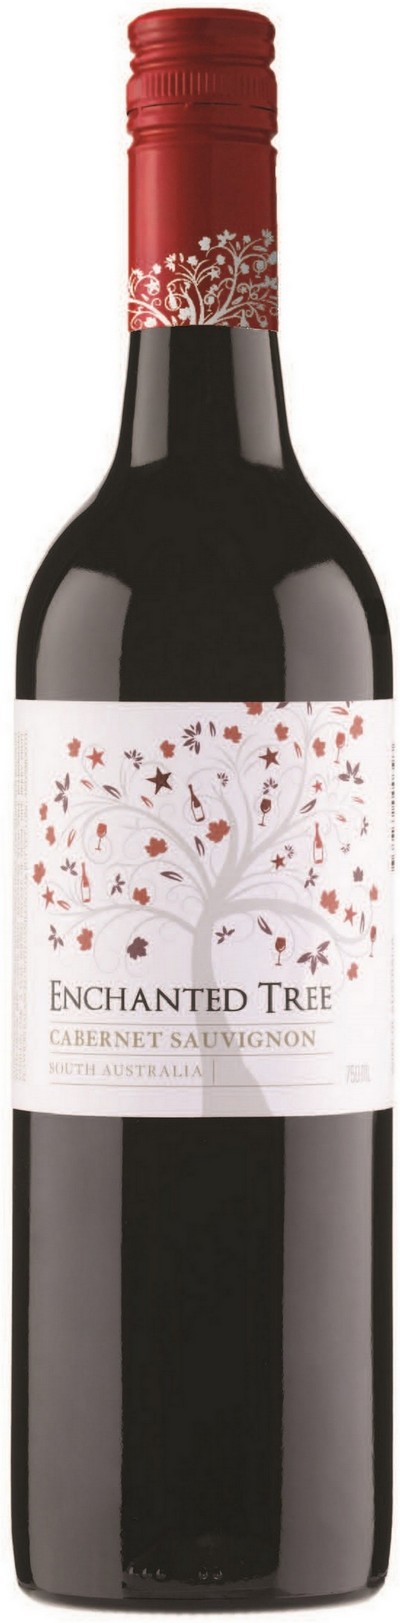 enchanted-tree-south-australia-cabernet-sauvignon-2017